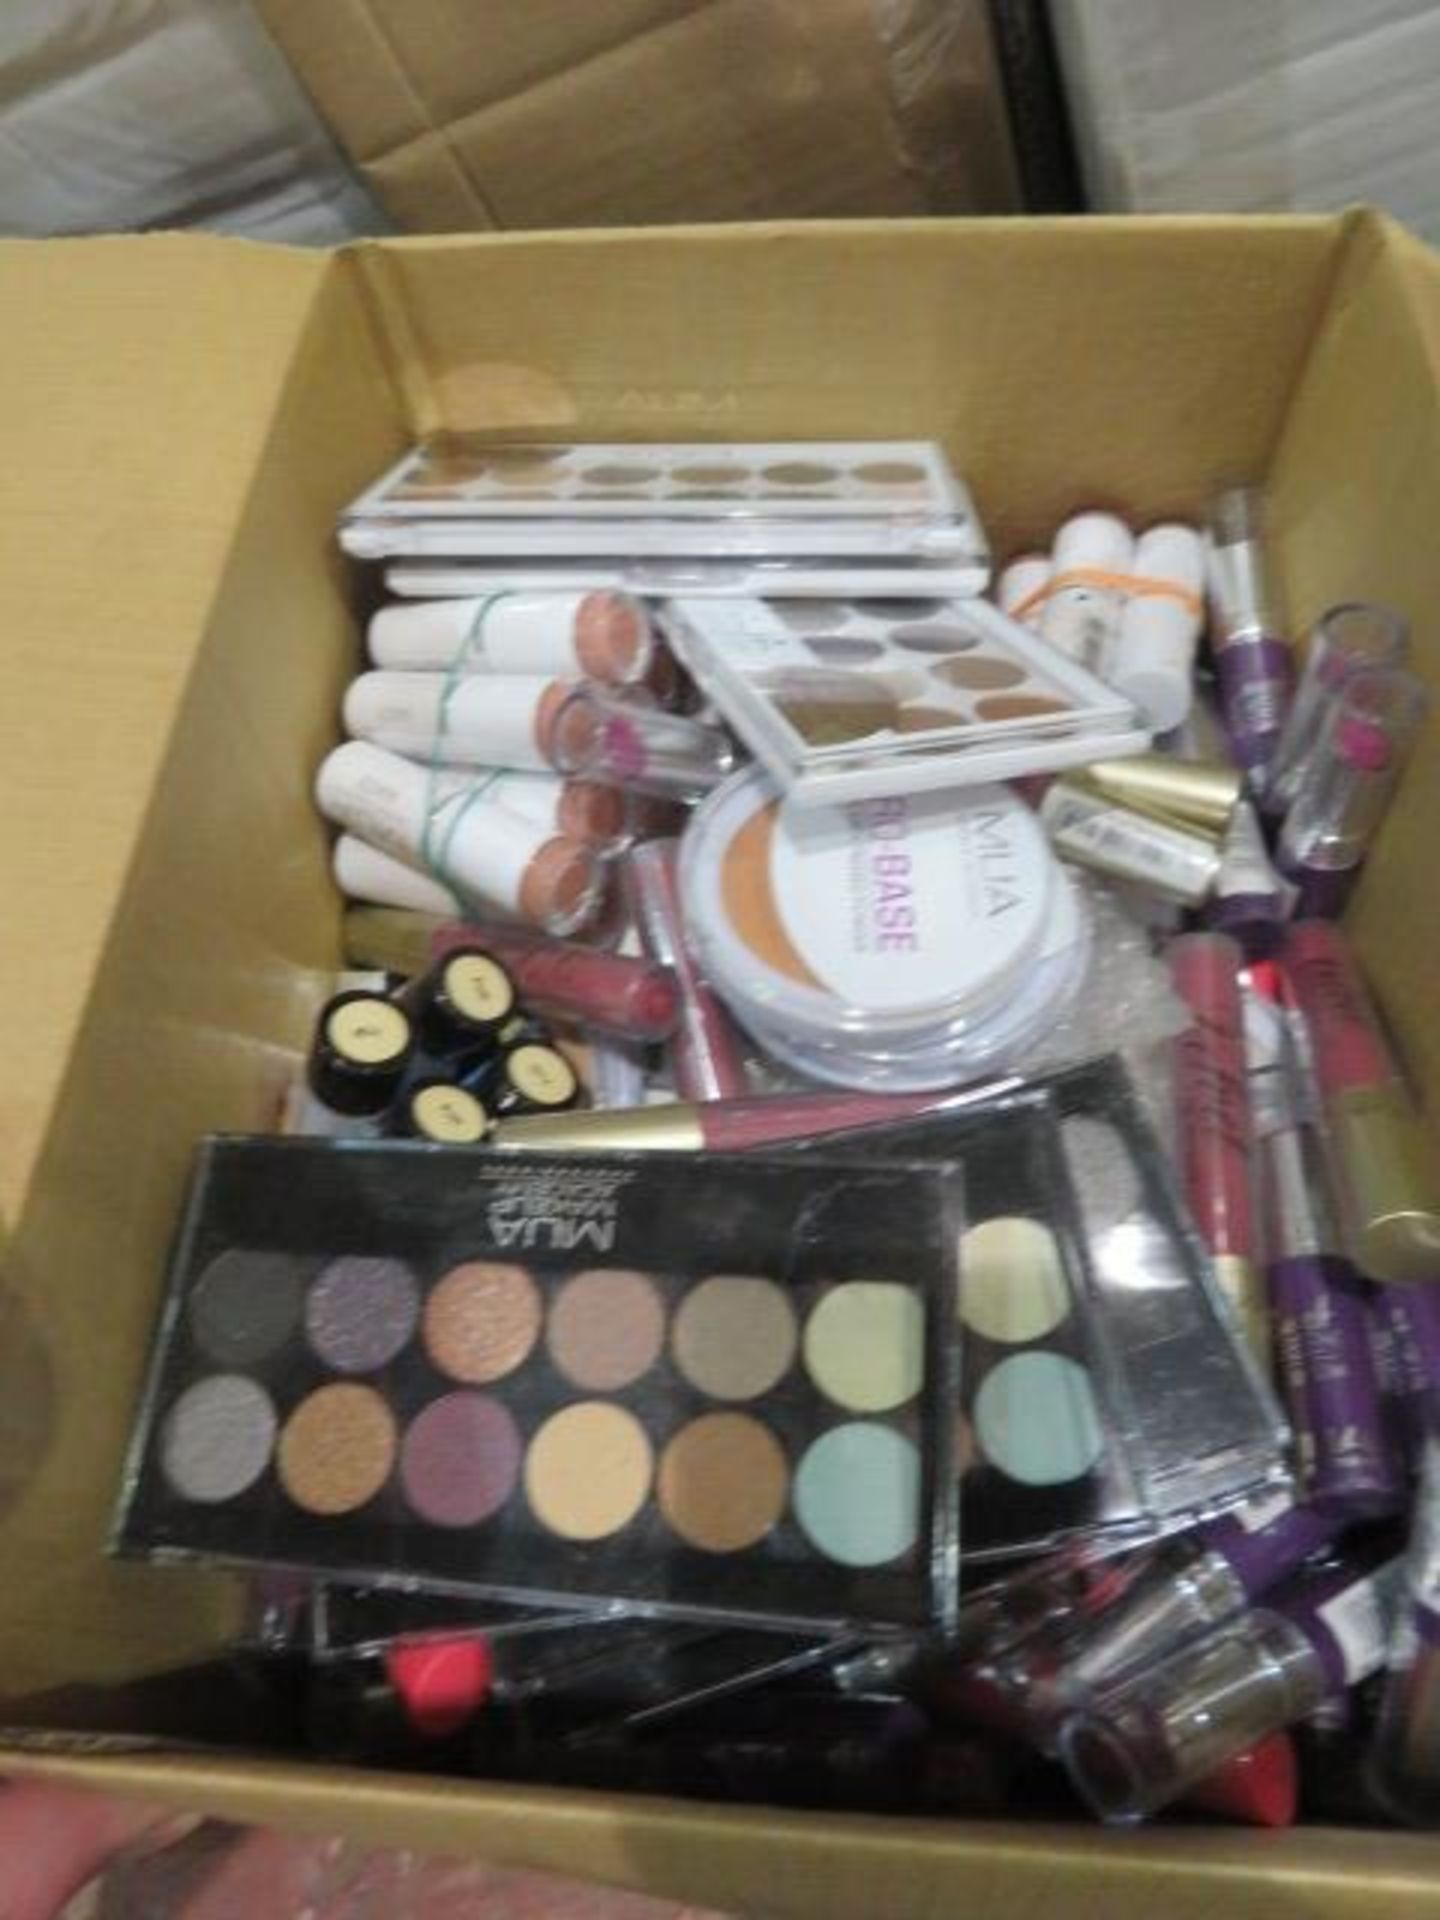 (Z211) Circa. 200 items of various new make up acadamy make up to include: mega volume mascara,...